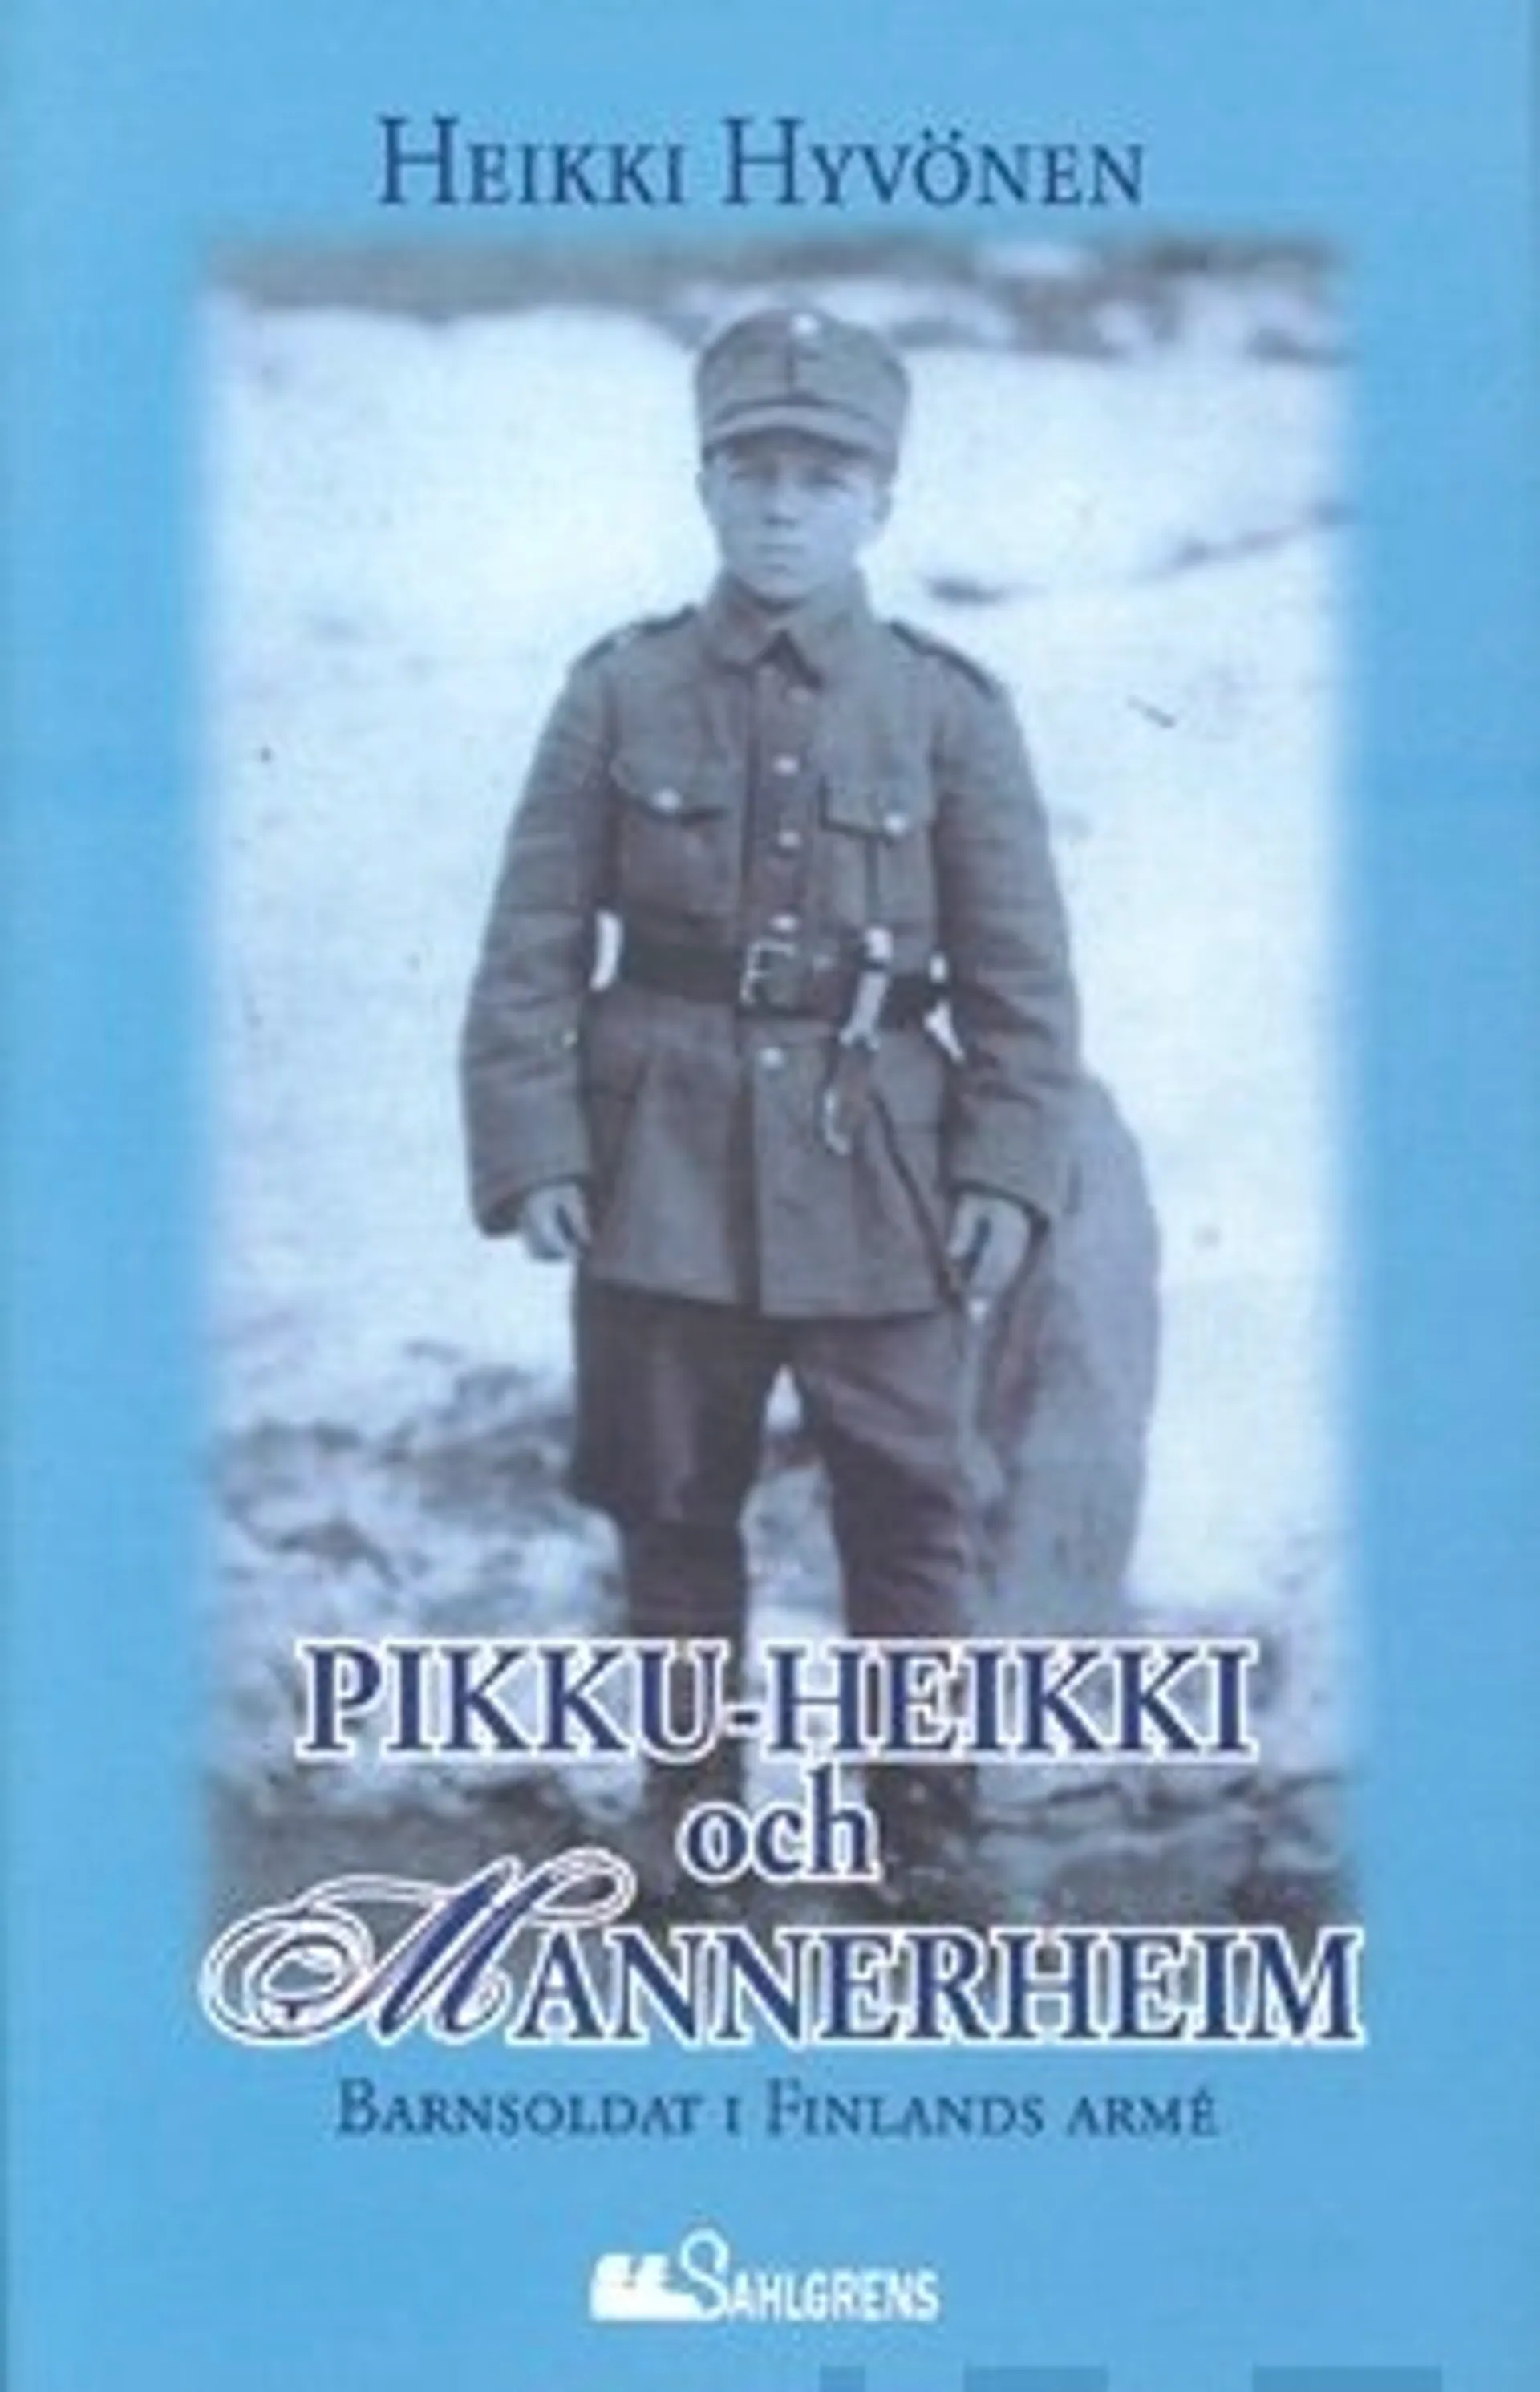 Pikku-Heikki och Mannerheim